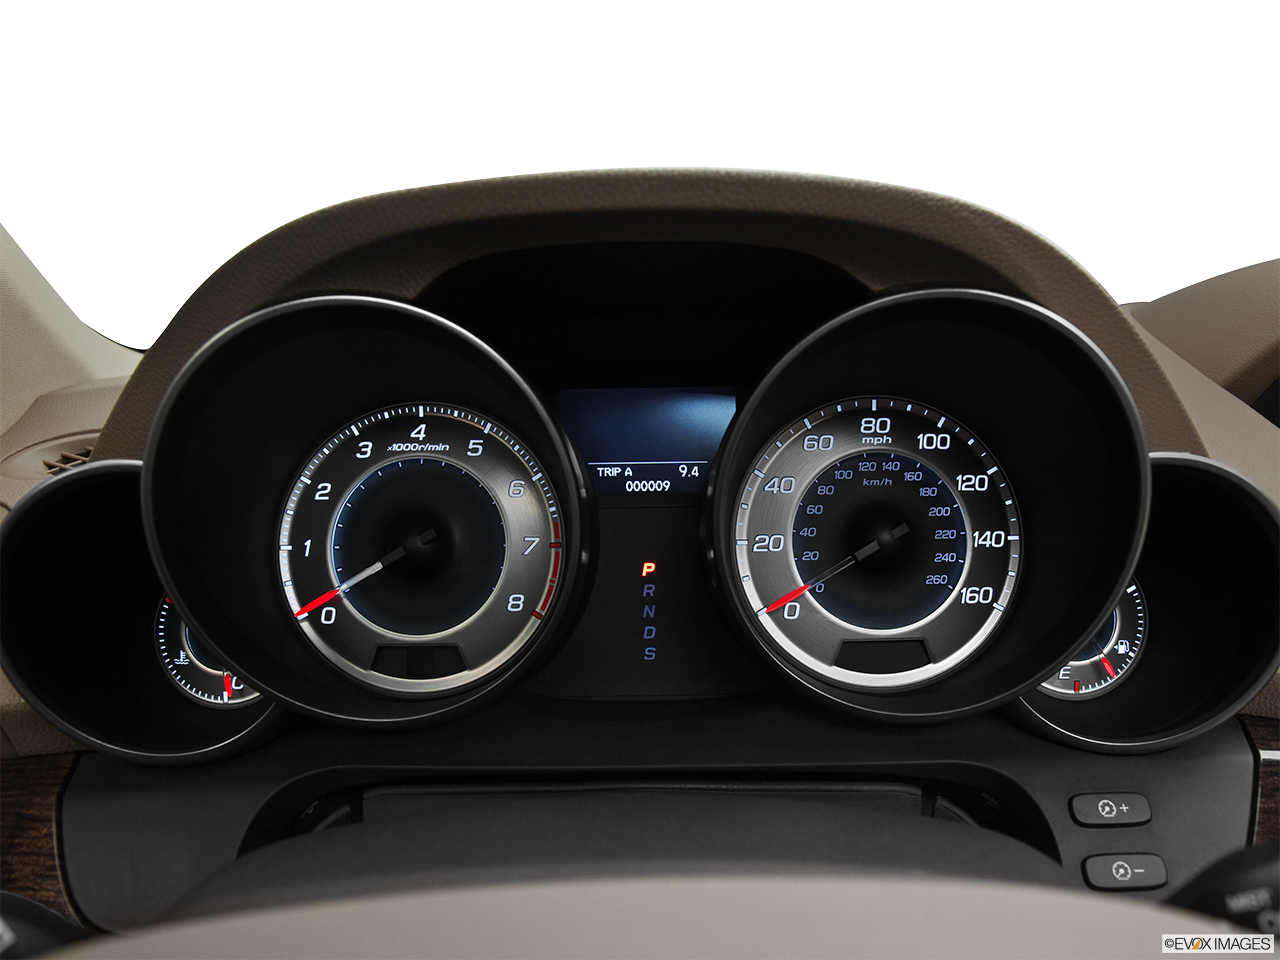 2012 Acura MDX MDX Speedometer/tachometer. 